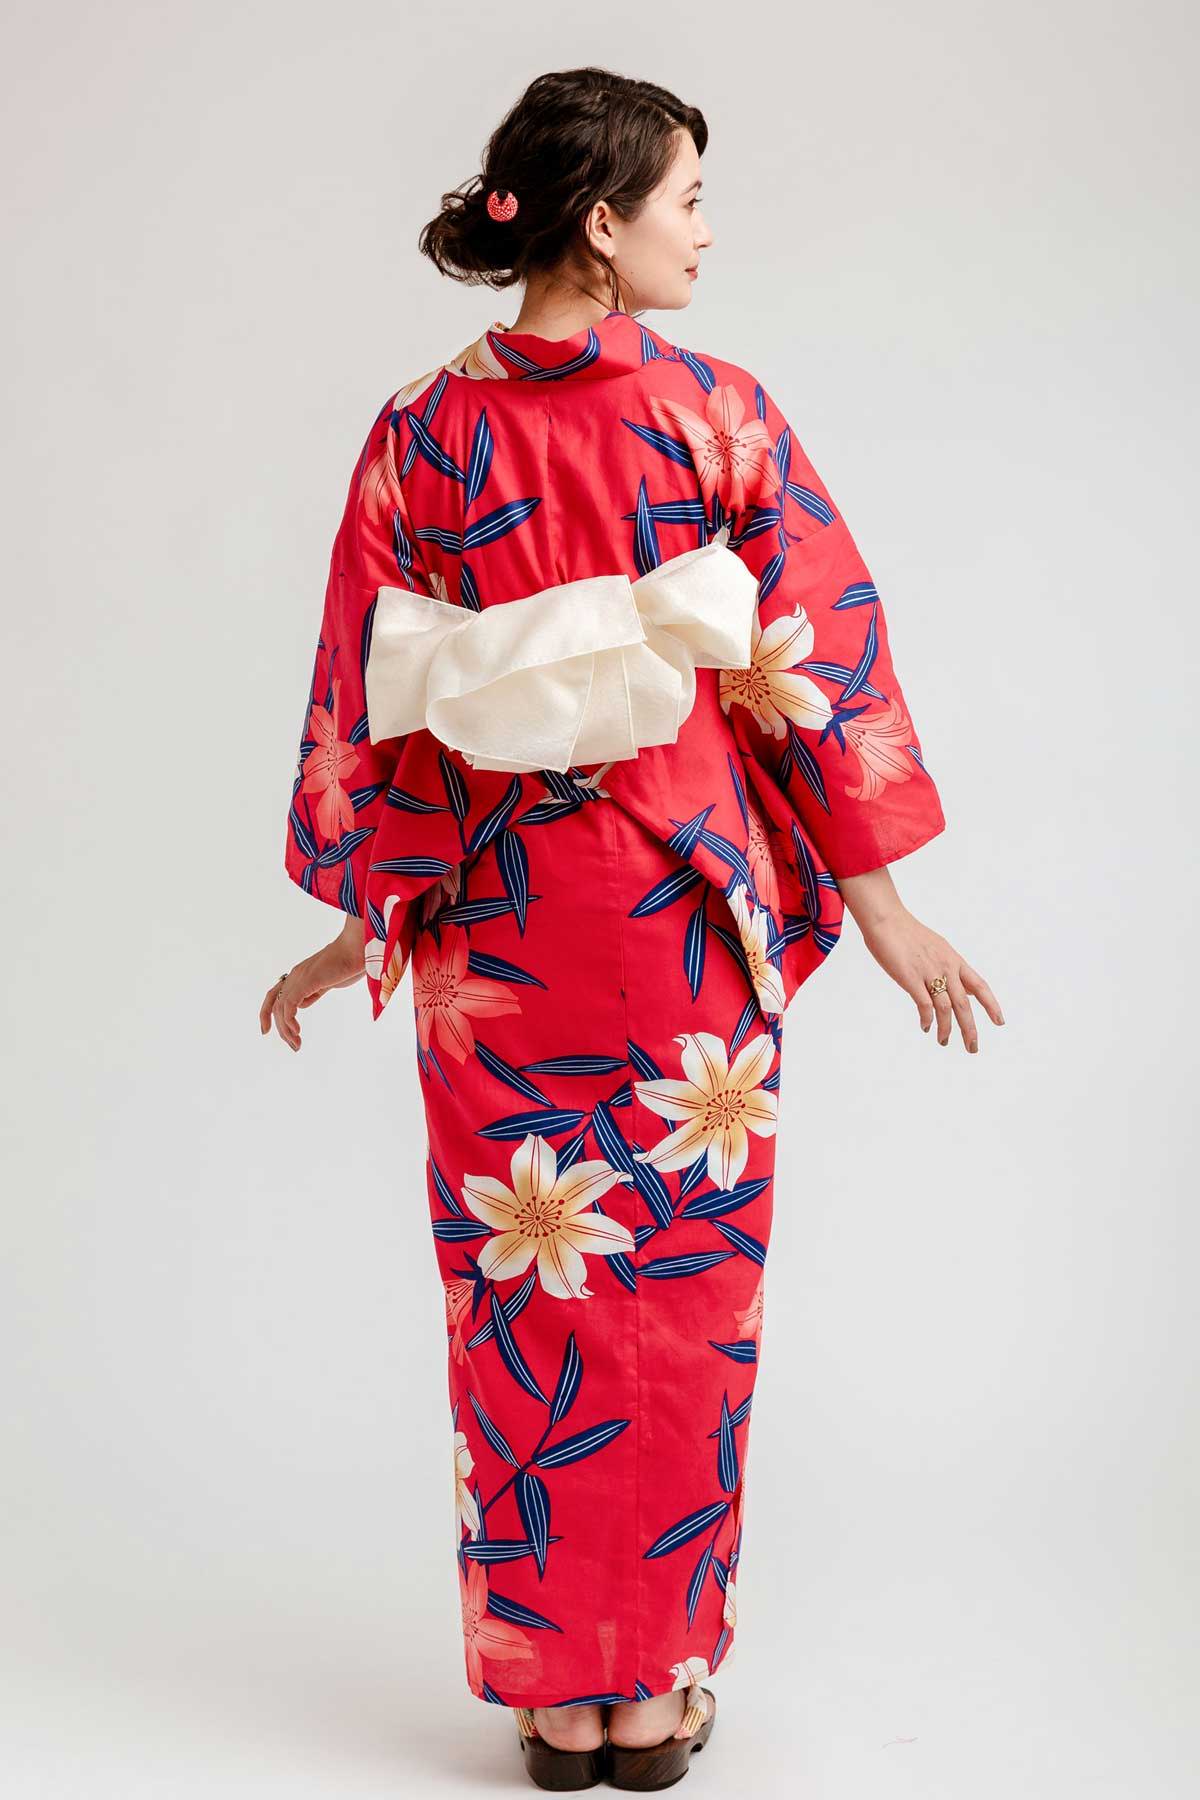 Details about   Japanese Traditional KAKU OBI Kimono Belt One Touch Easy Wear White JAPAN 